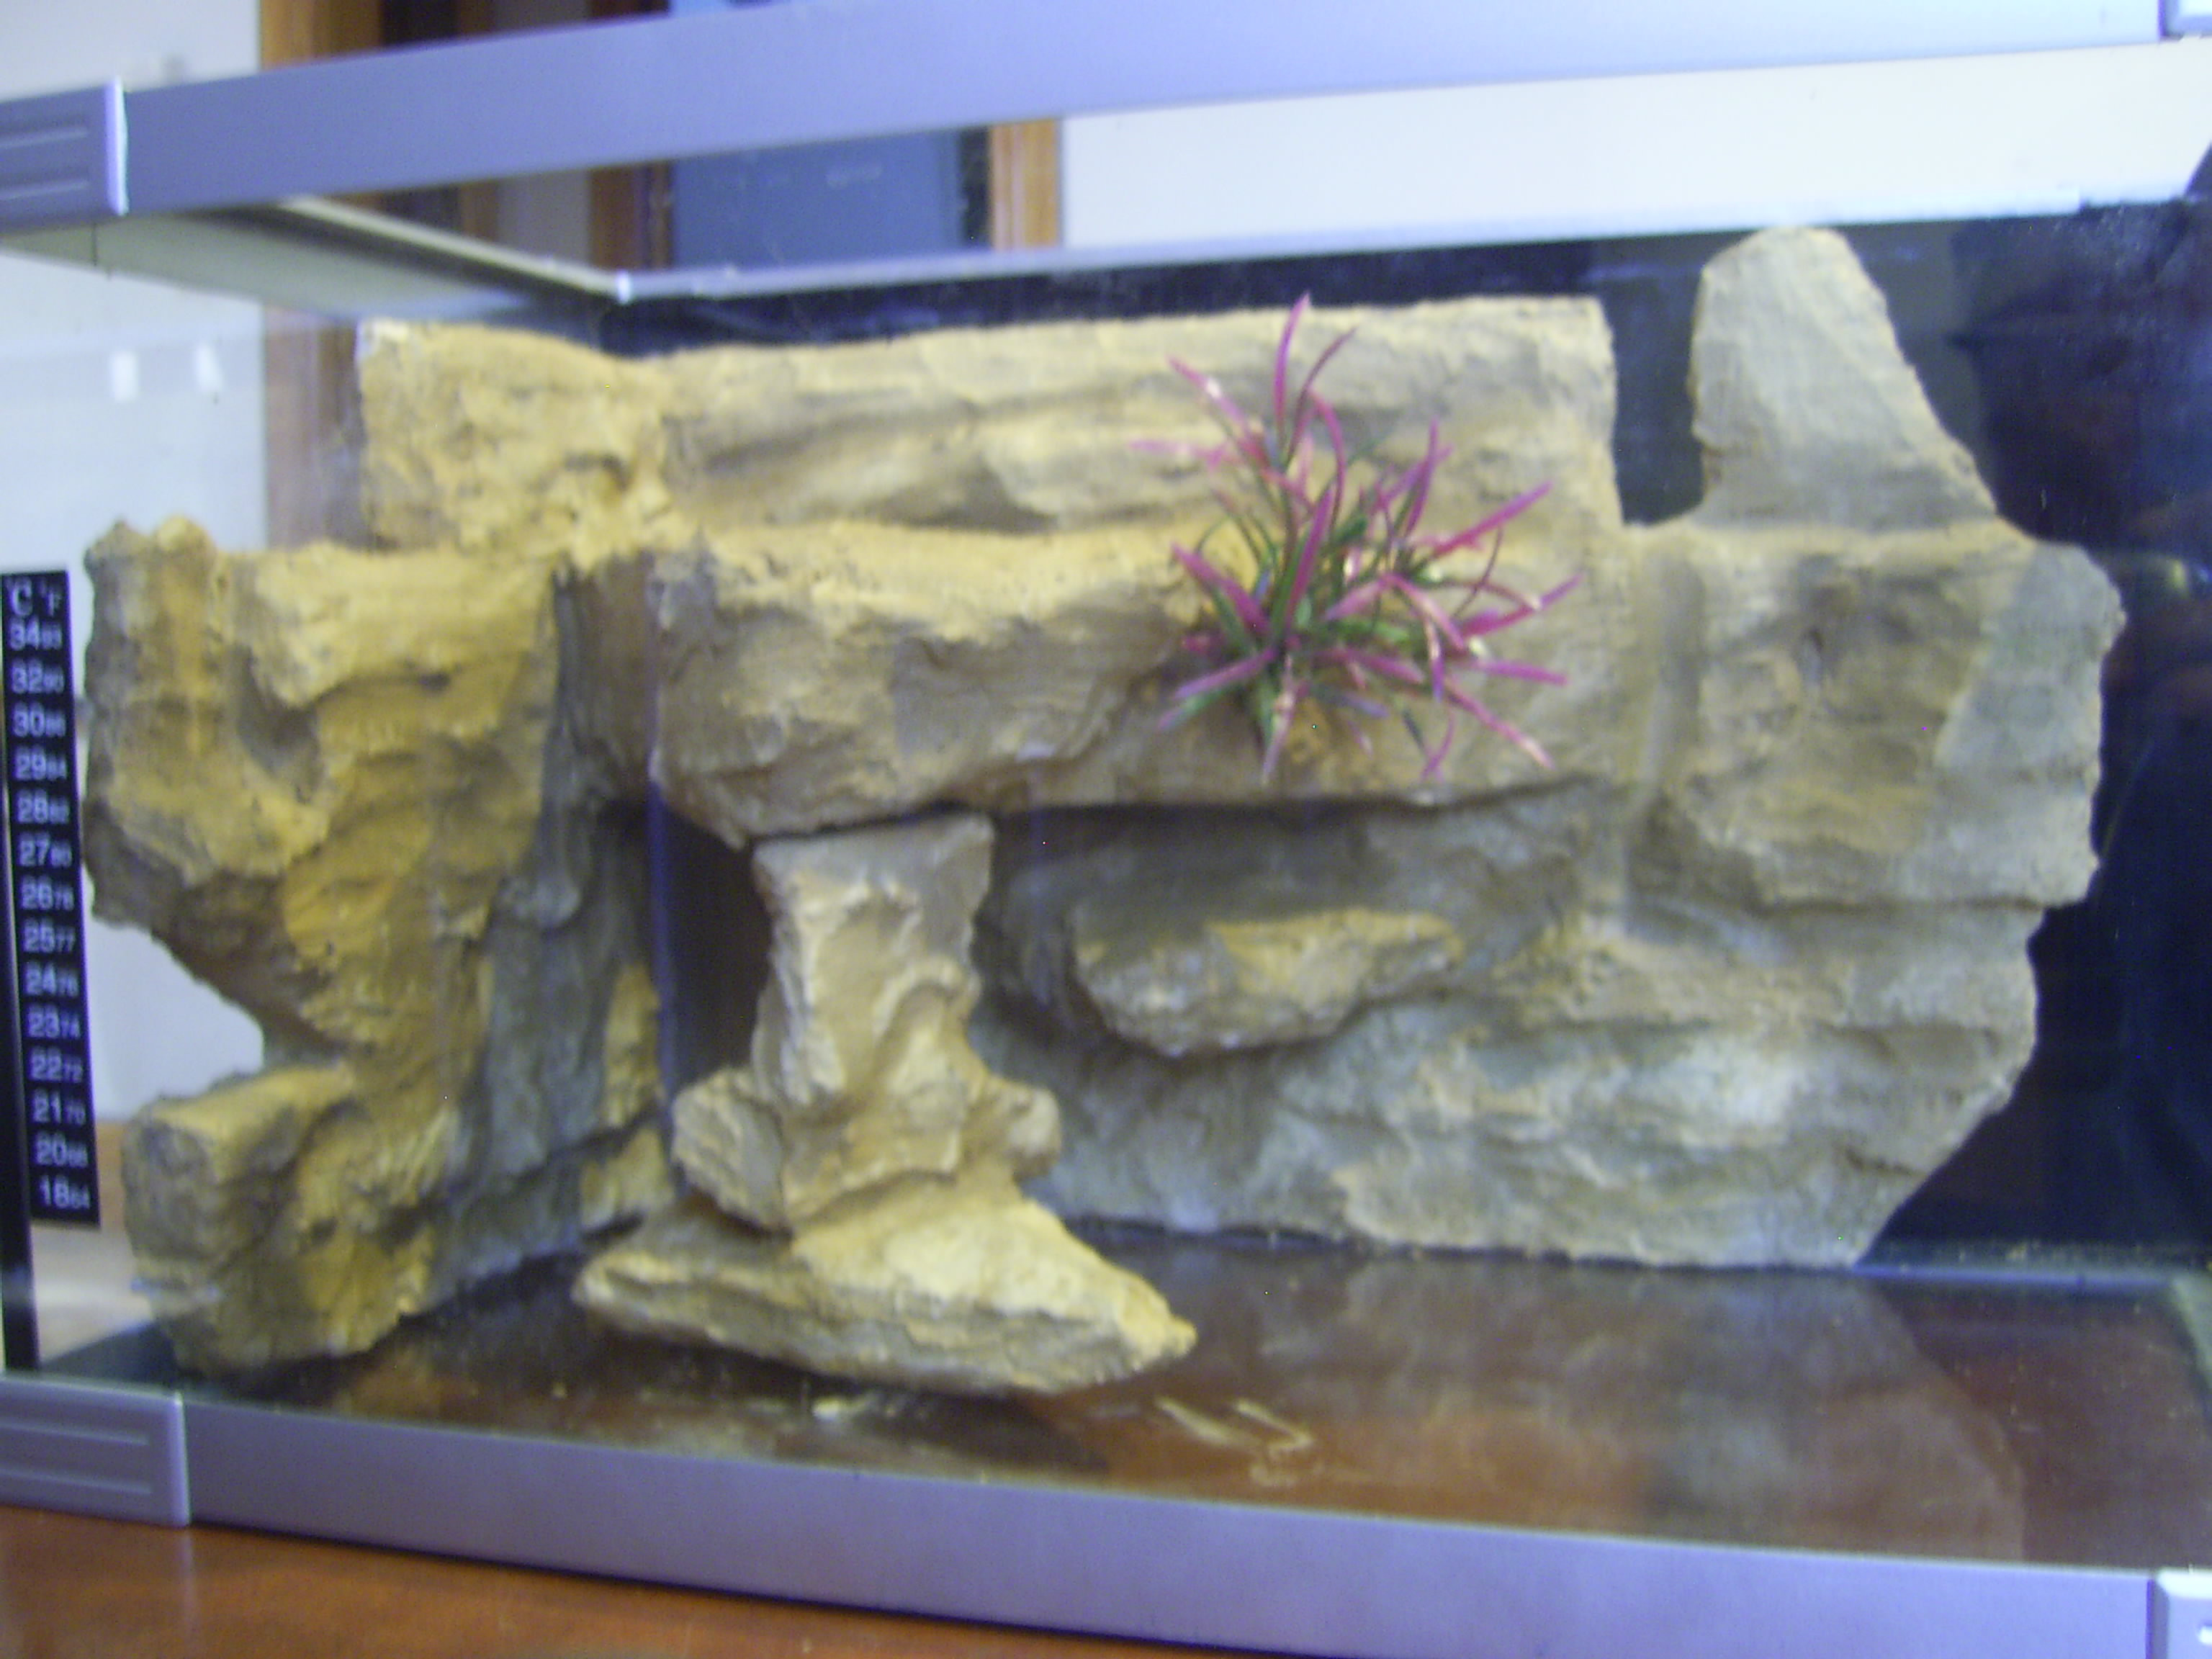 Best ideas about DIY Aquarium Backround
. Save or Pin cichlids DIY aquarium background Now.